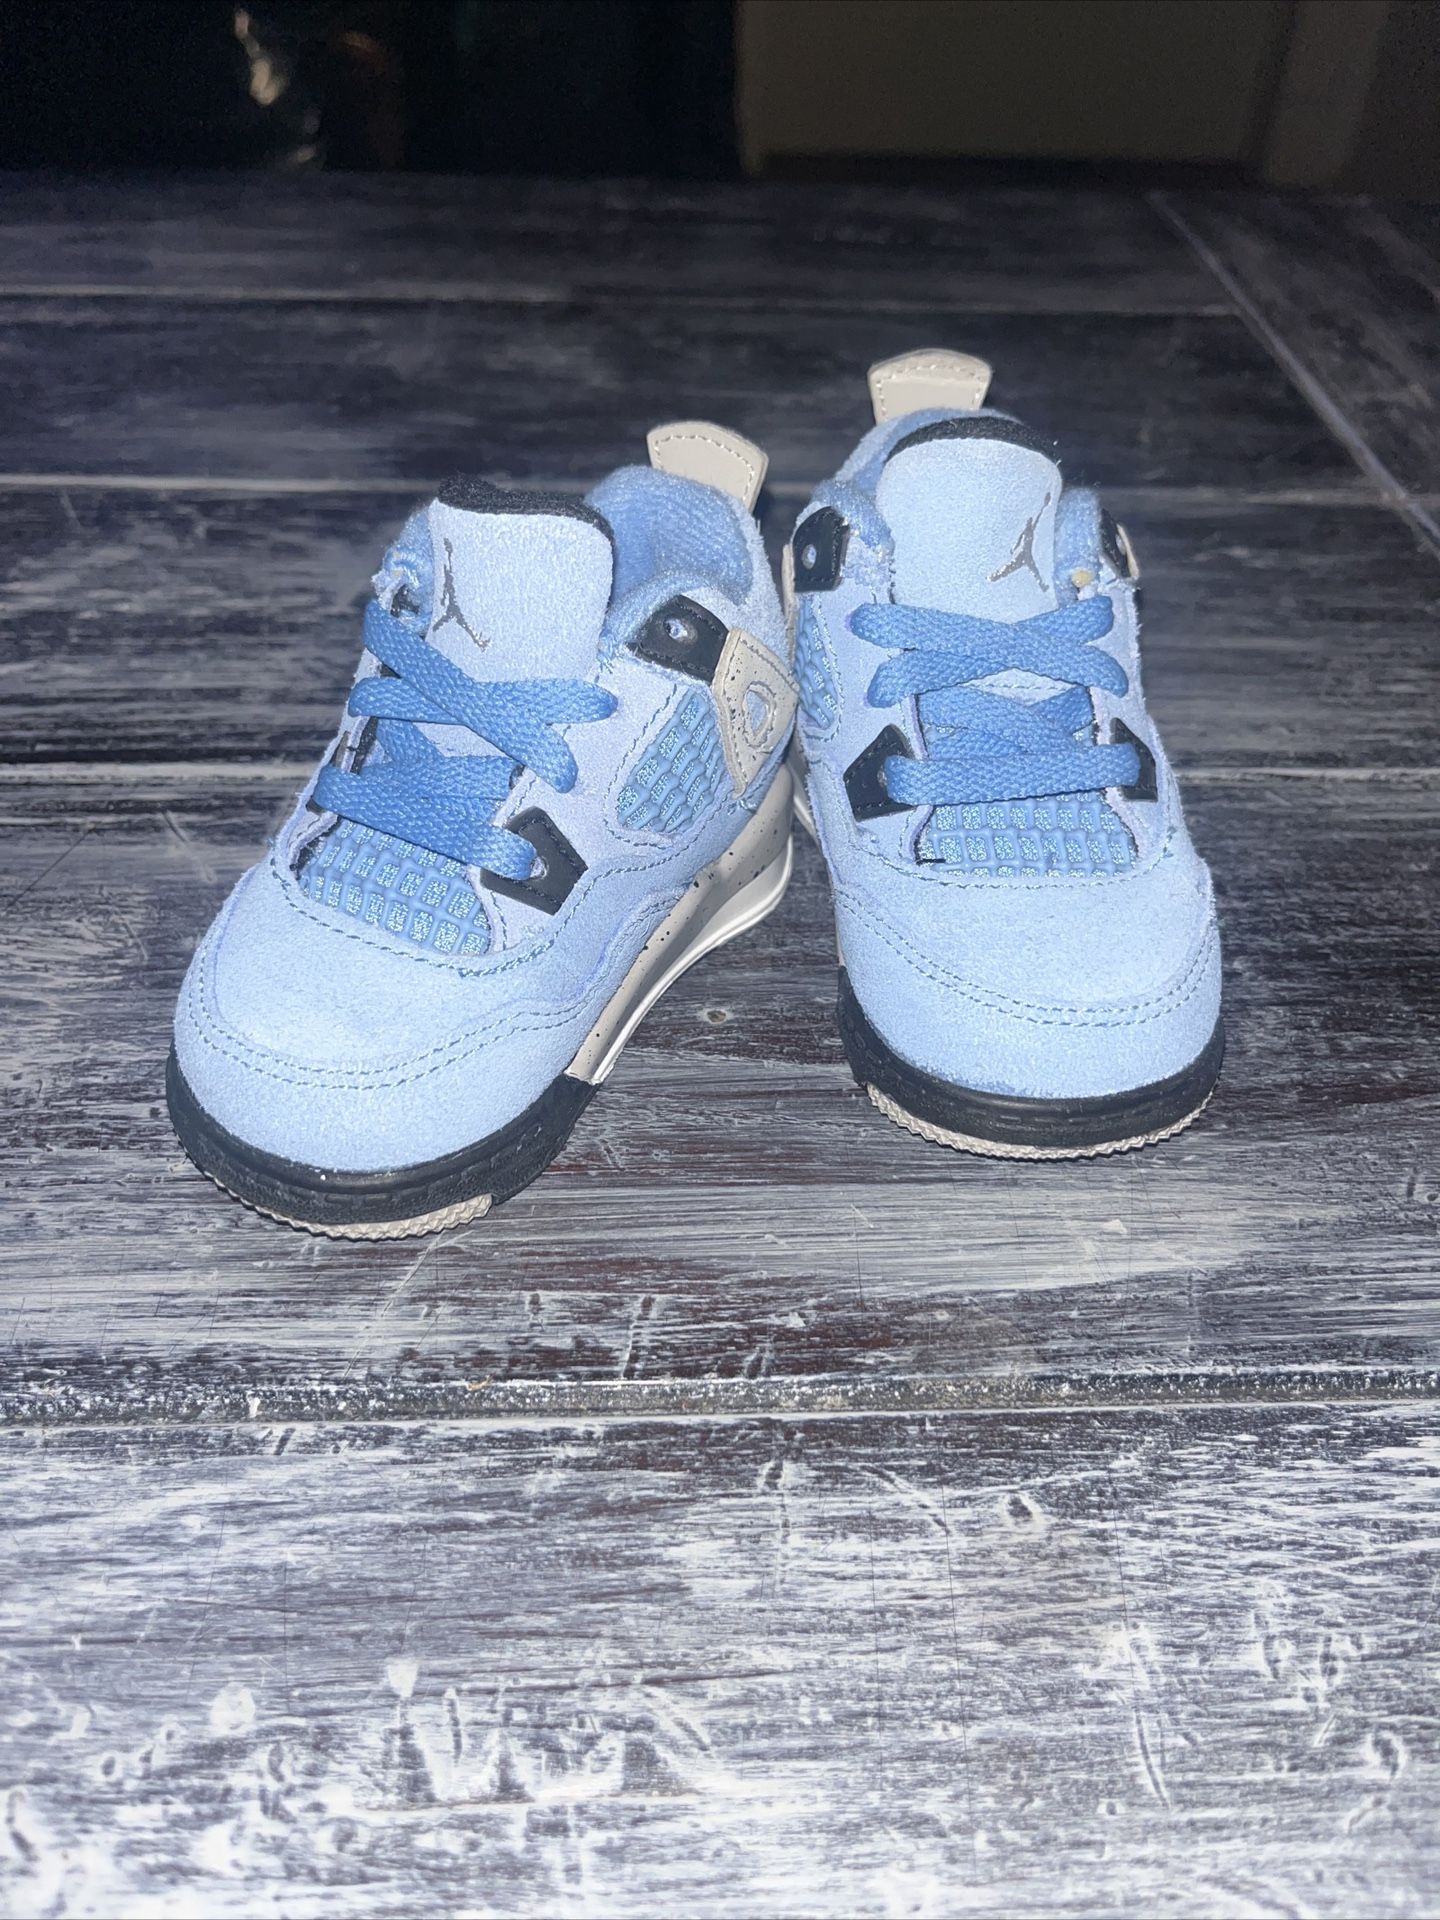 Nike Authentic Air Jordan 4 Retro UNC University Blue Toddler Baby Boy Size 3C